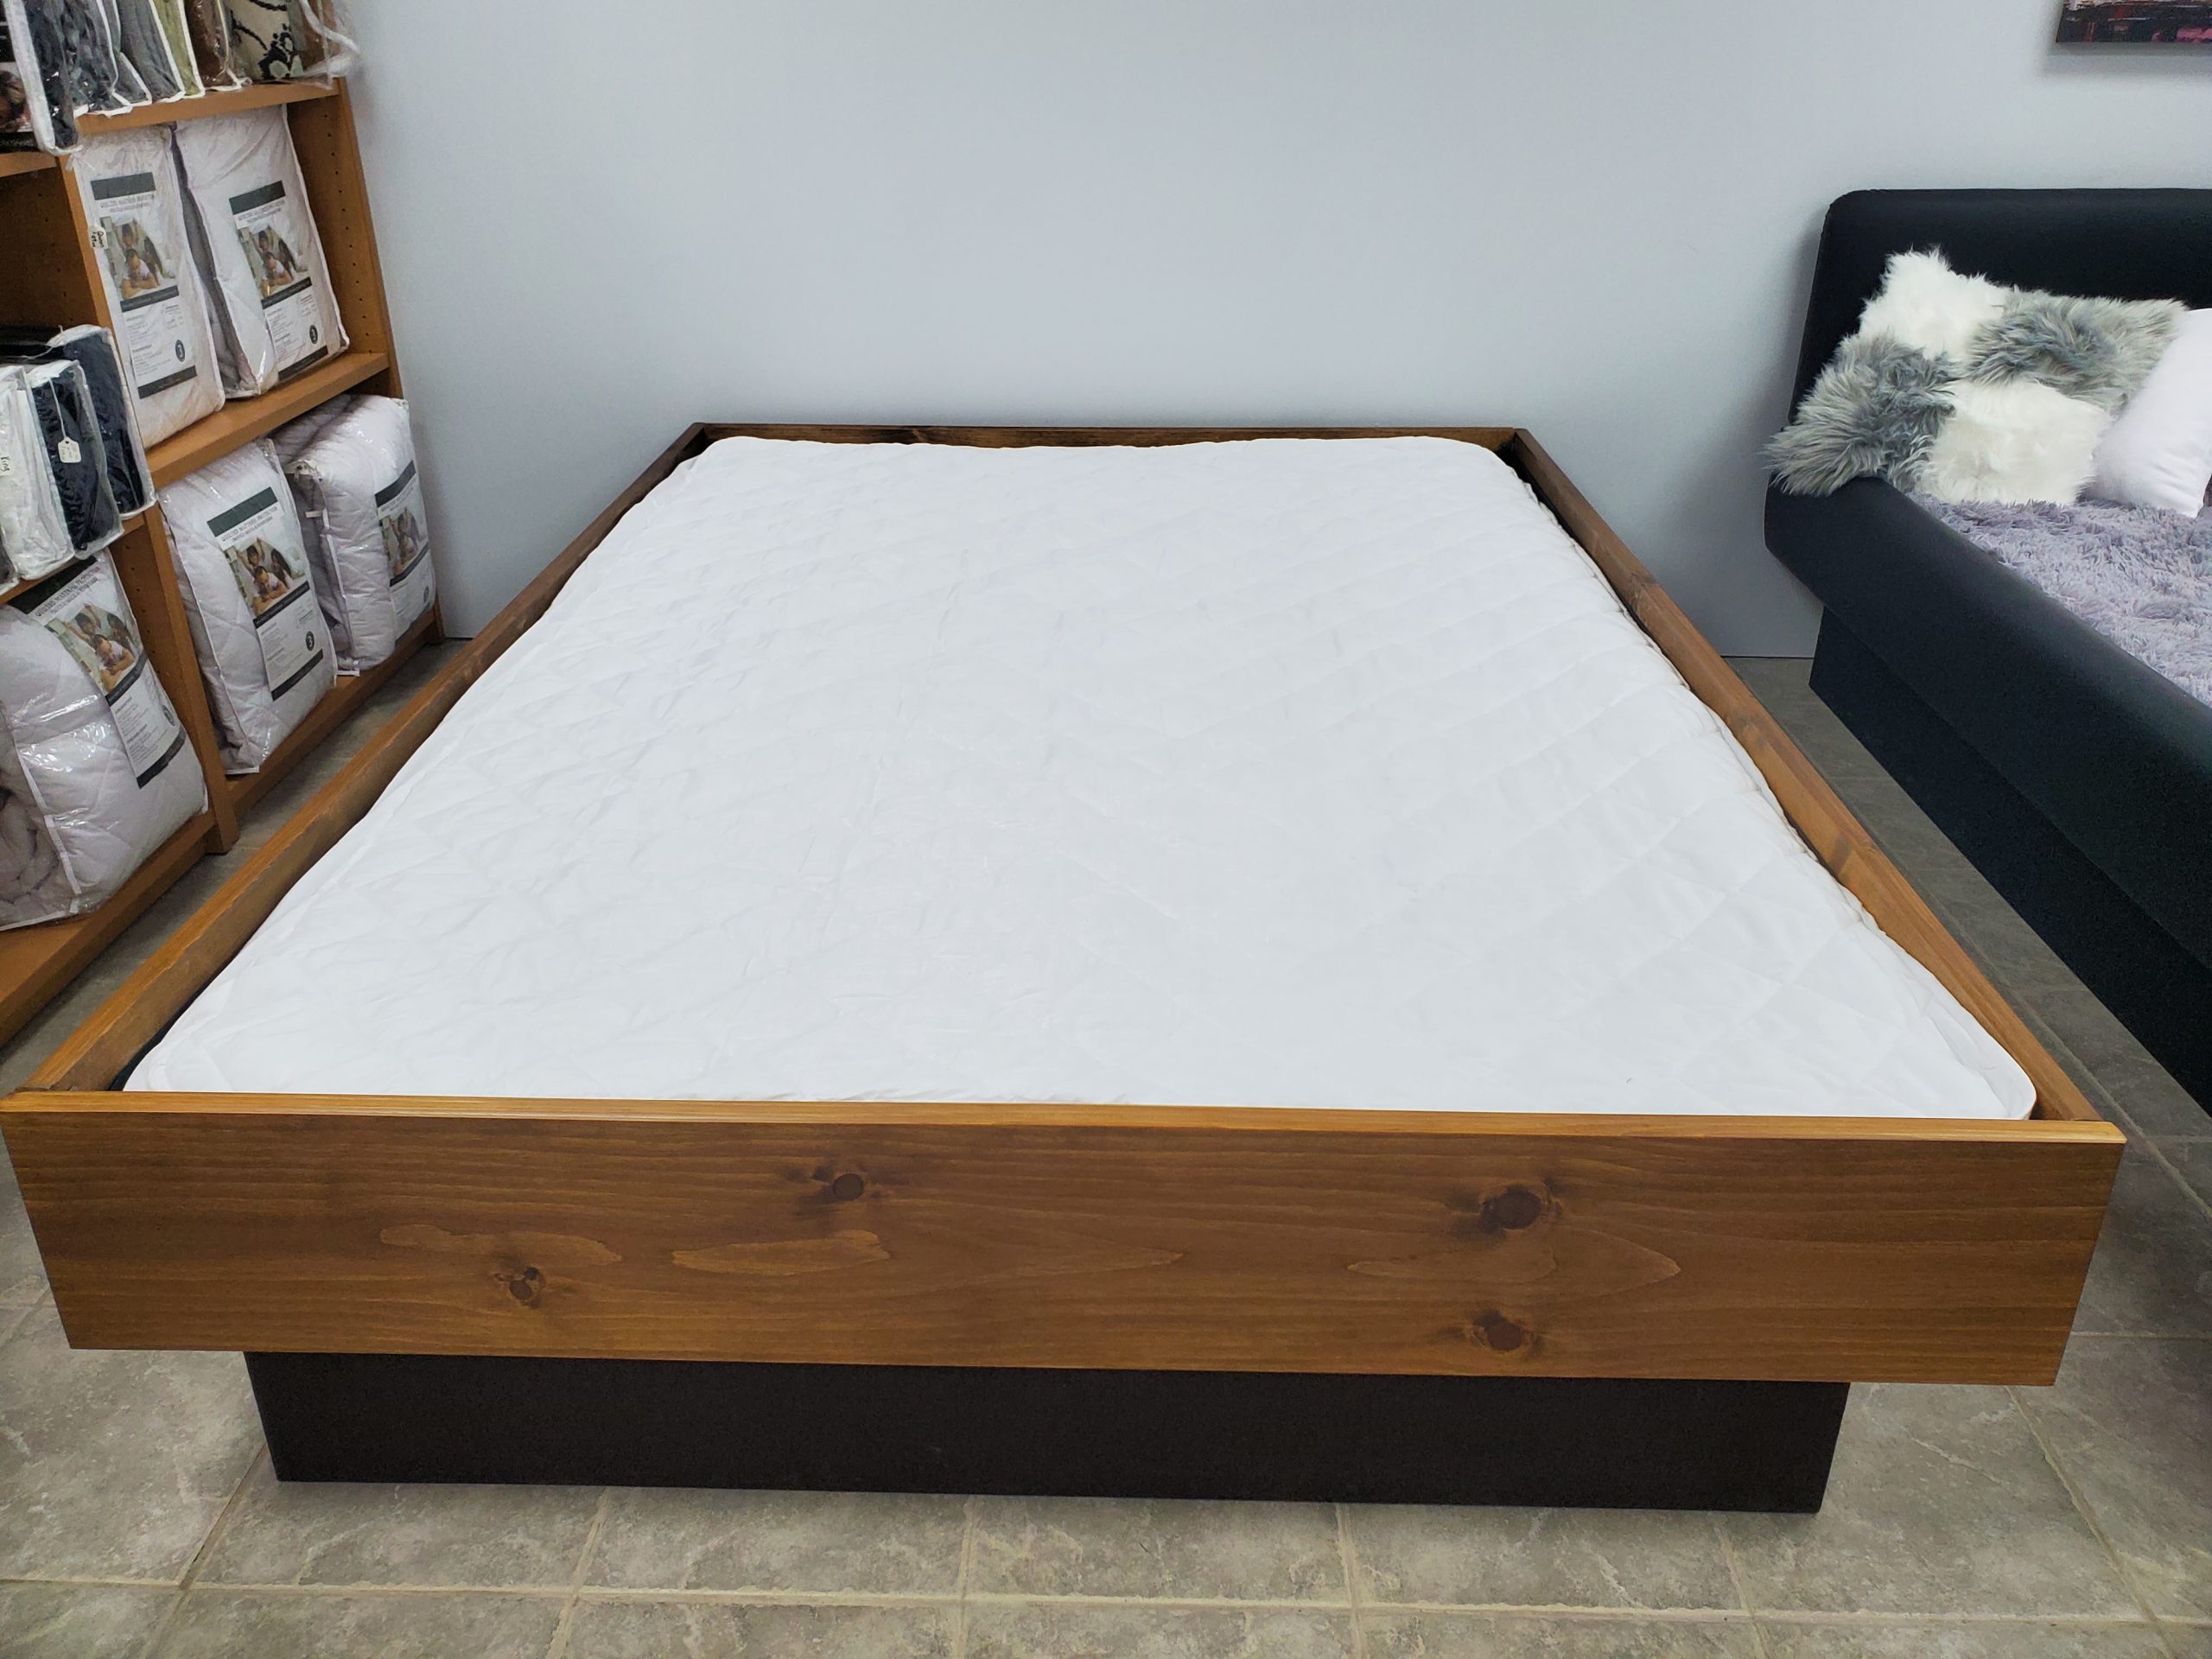 super single waterbed mattress cover